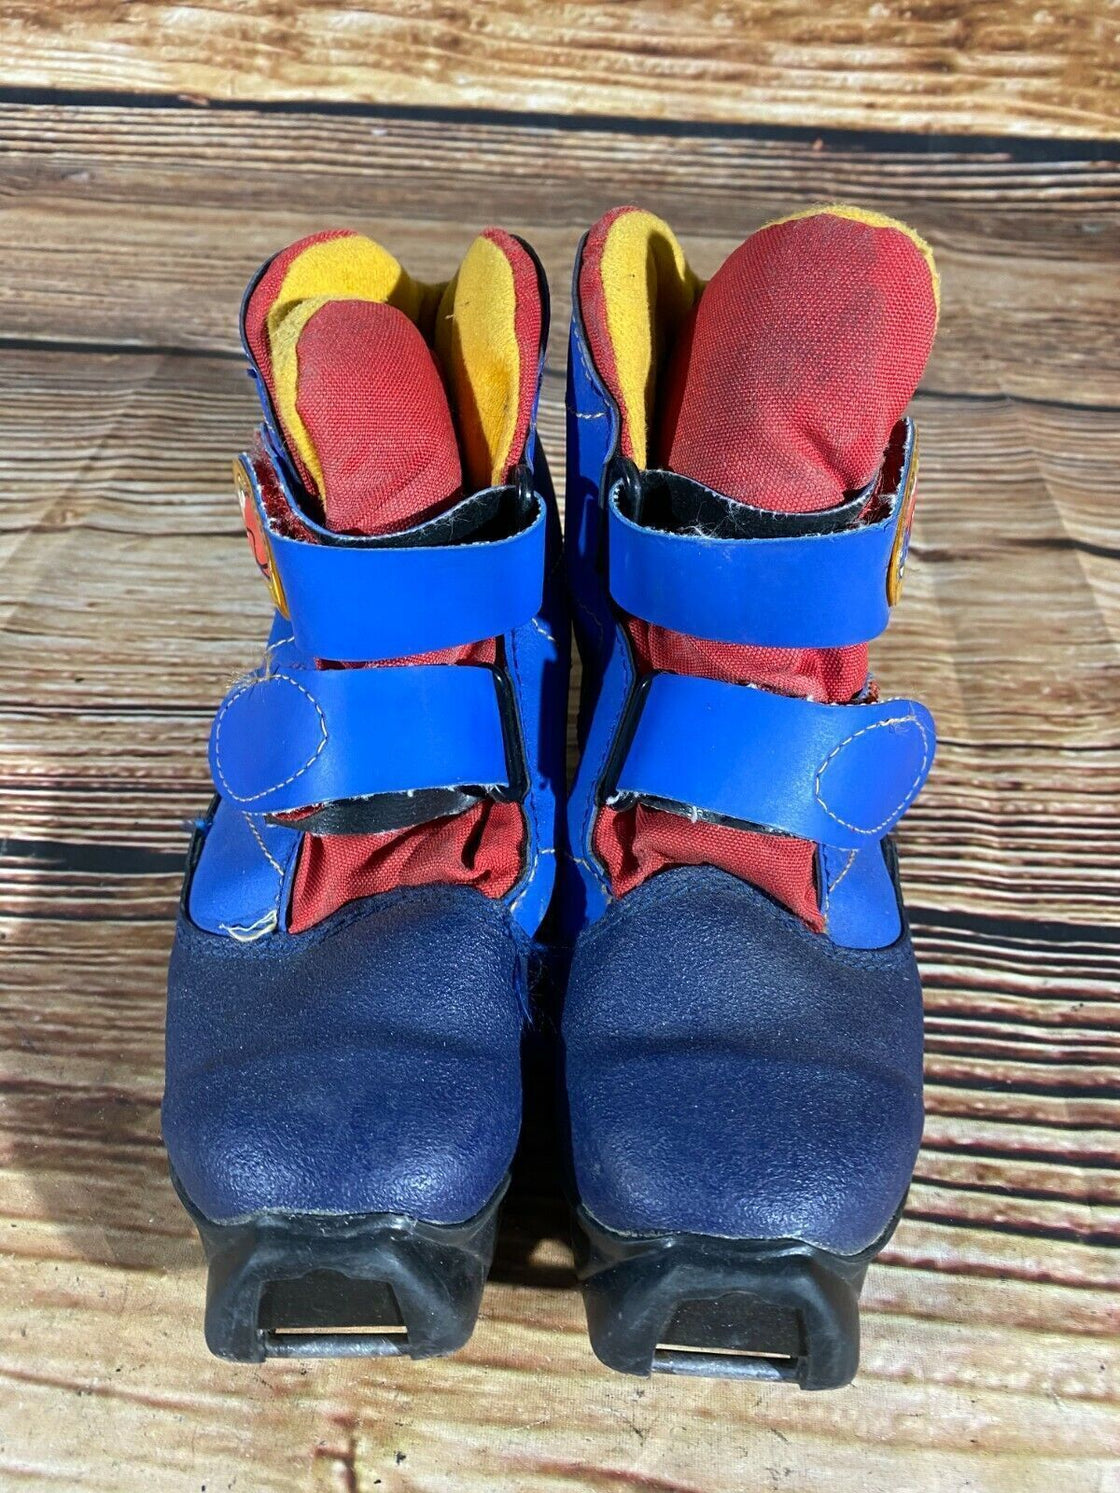 SALOMON Kids Nordic Cross Country Ski Boots Size EU33 US1.5 SNS profile